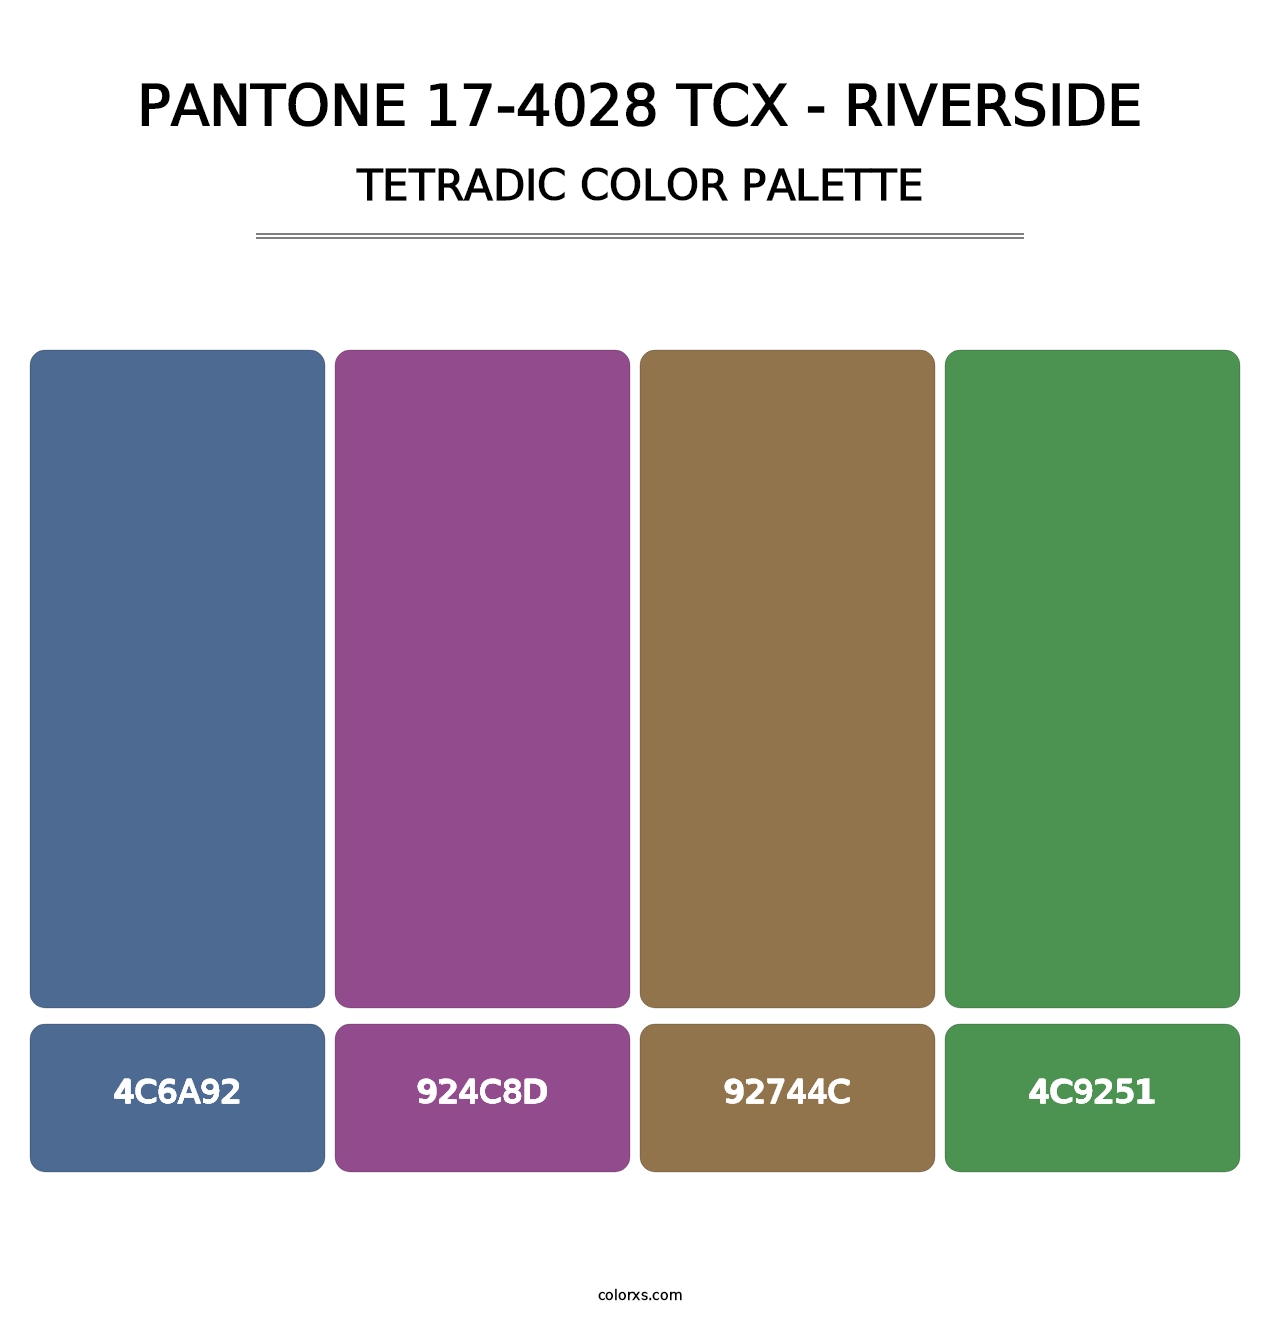 PANTONE 17-4028 TCX - Riverside - Tetradic Color Palette